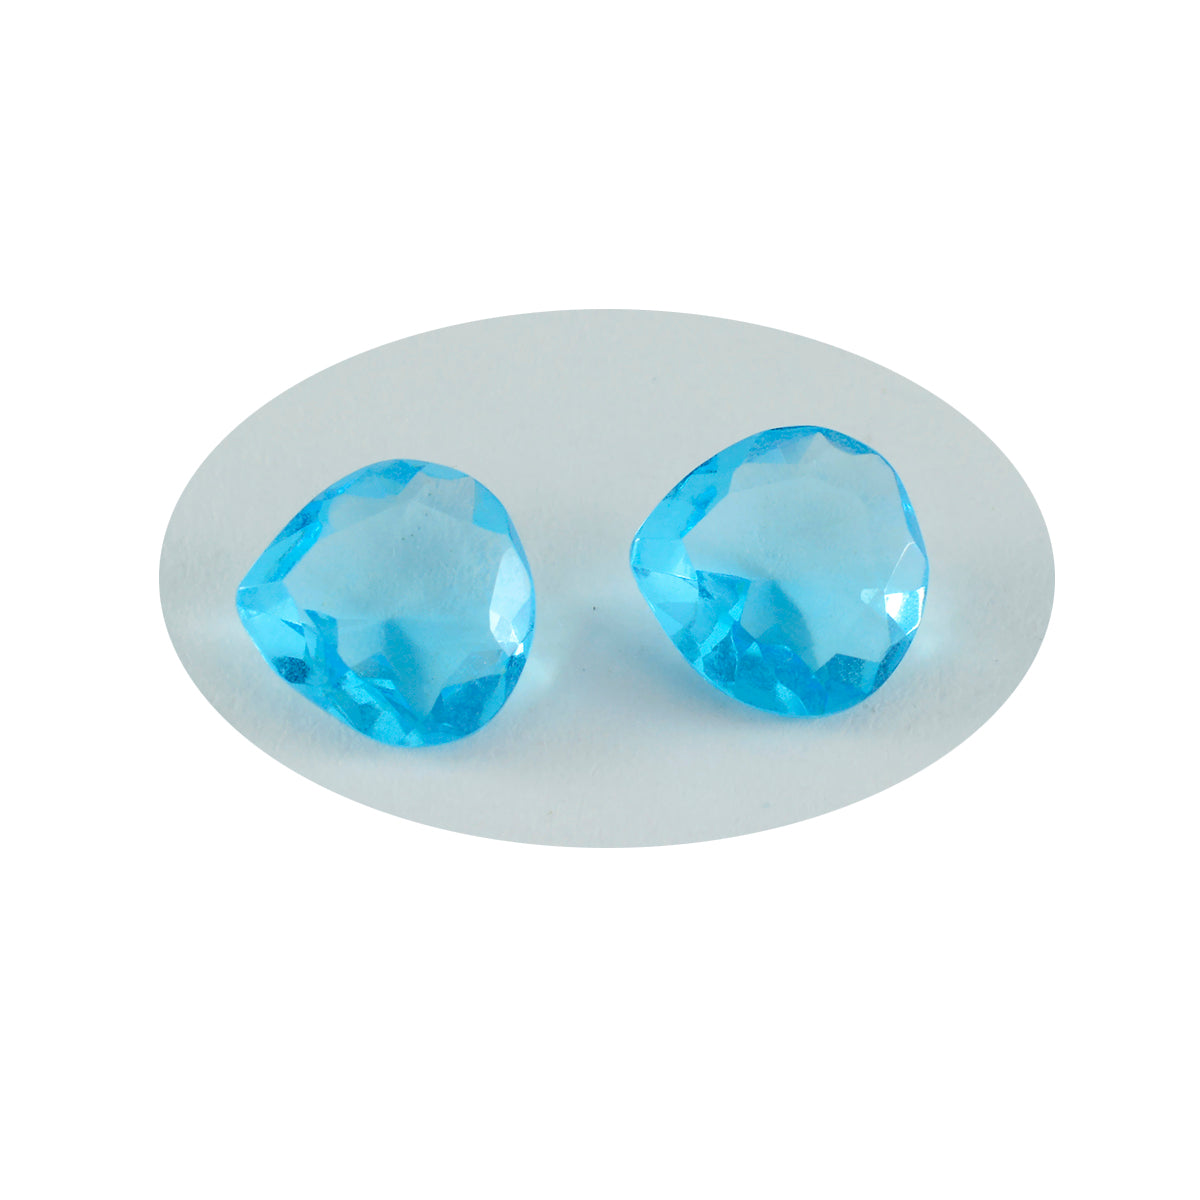 Riyogems 1PC Blue Topaz CZ Faceted 13x13 mm Heart Shape fantastic Quality Stone